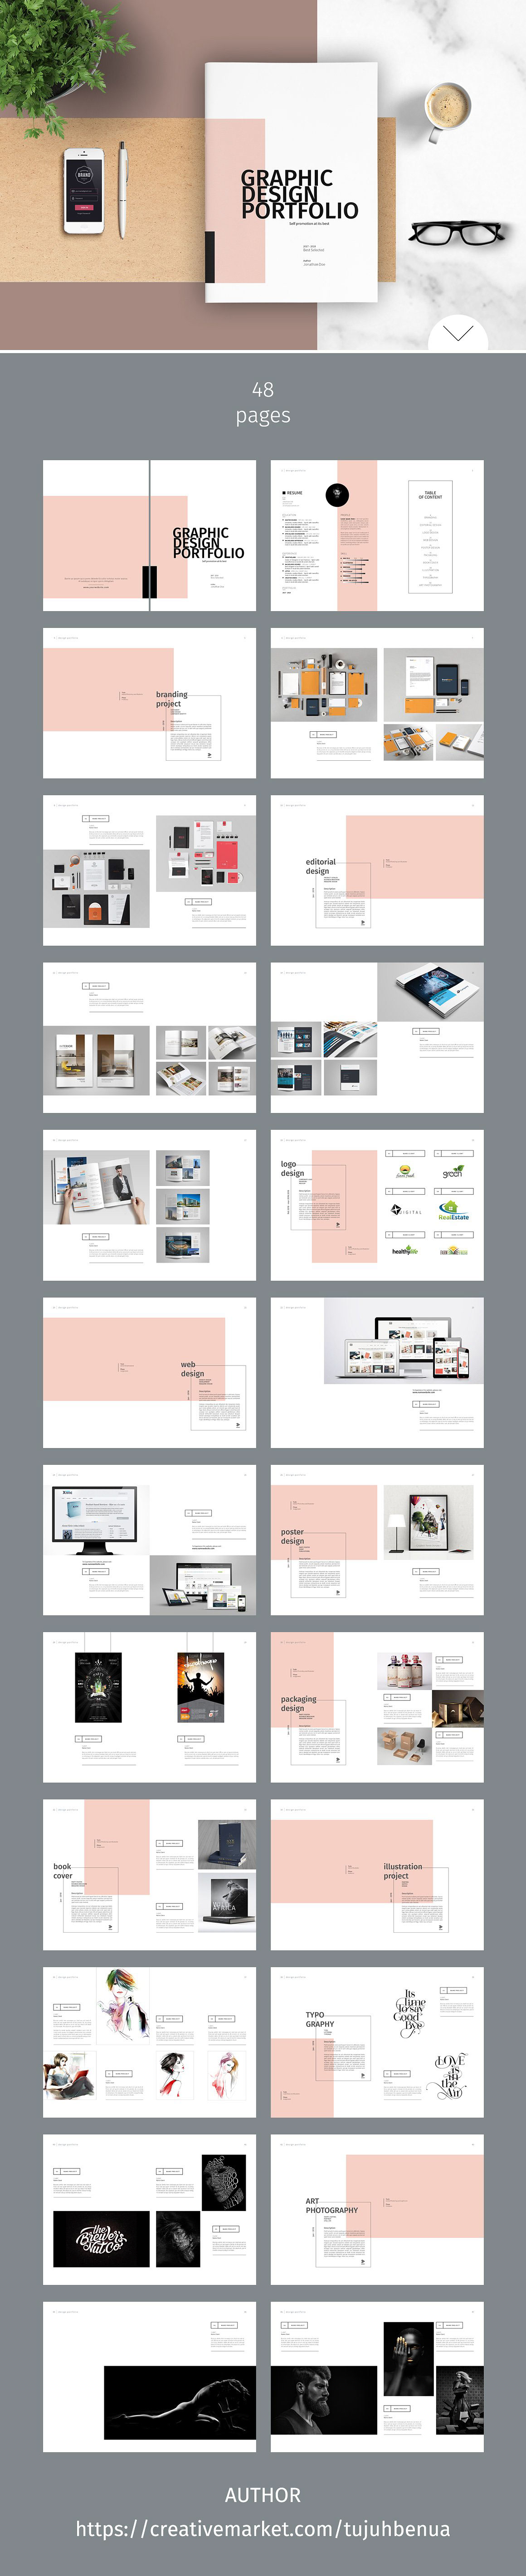 graphic-design-portfolio-template-on-behance